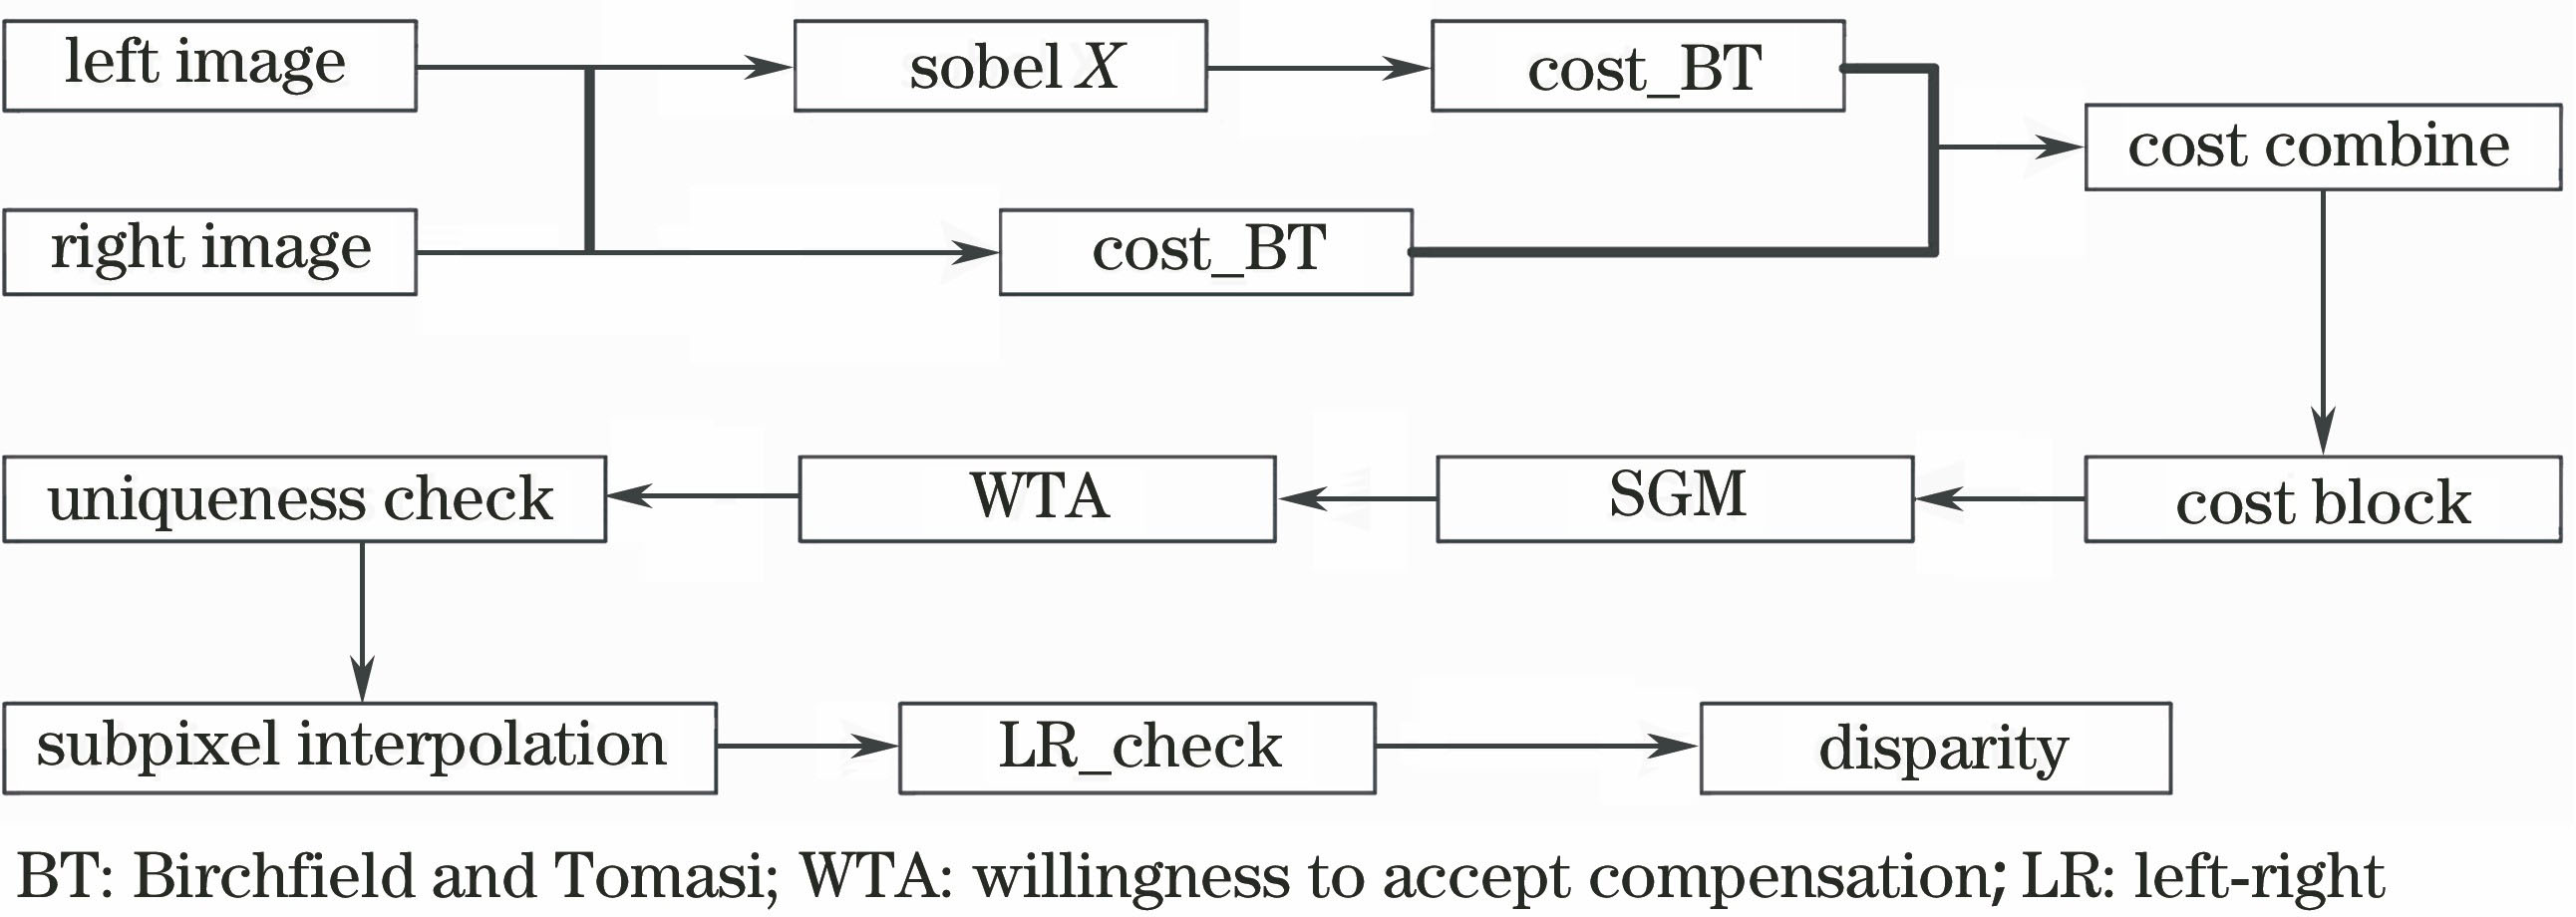 SGBM algorithm framework